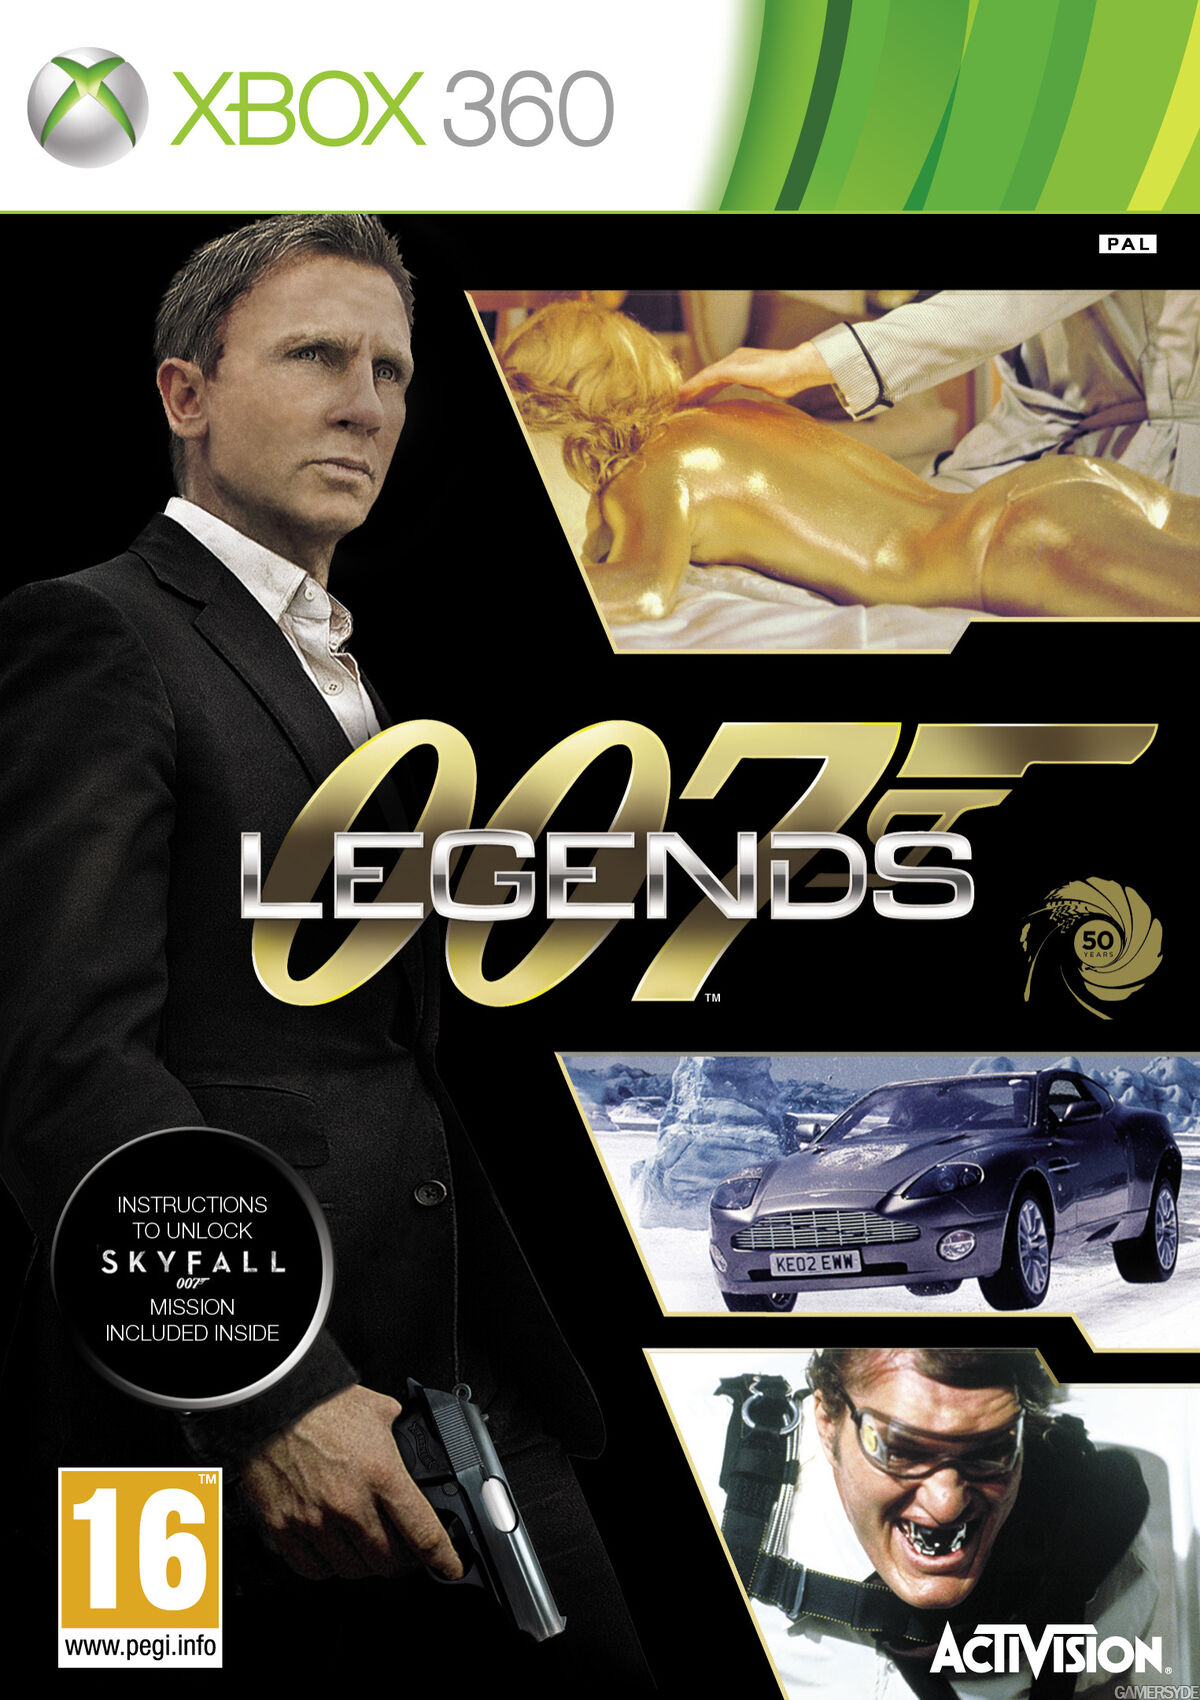 Nintendo News: Countdown to 007! GoldenEye 007 Shakes Up the